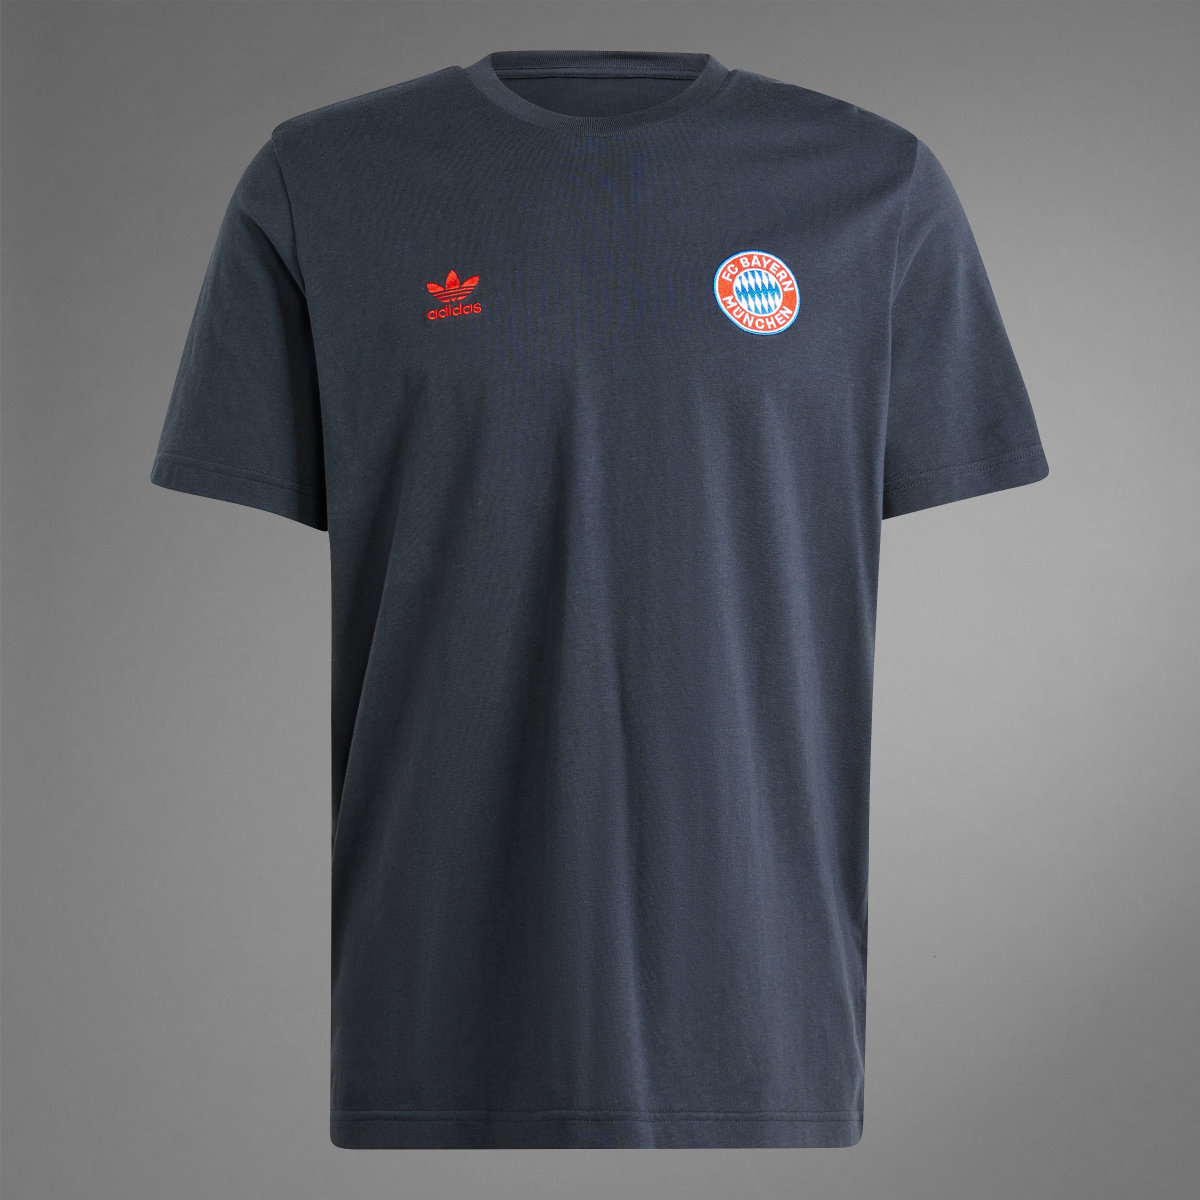 Adidas T-shirt Essentials Trefoil FC Bayern München. 9